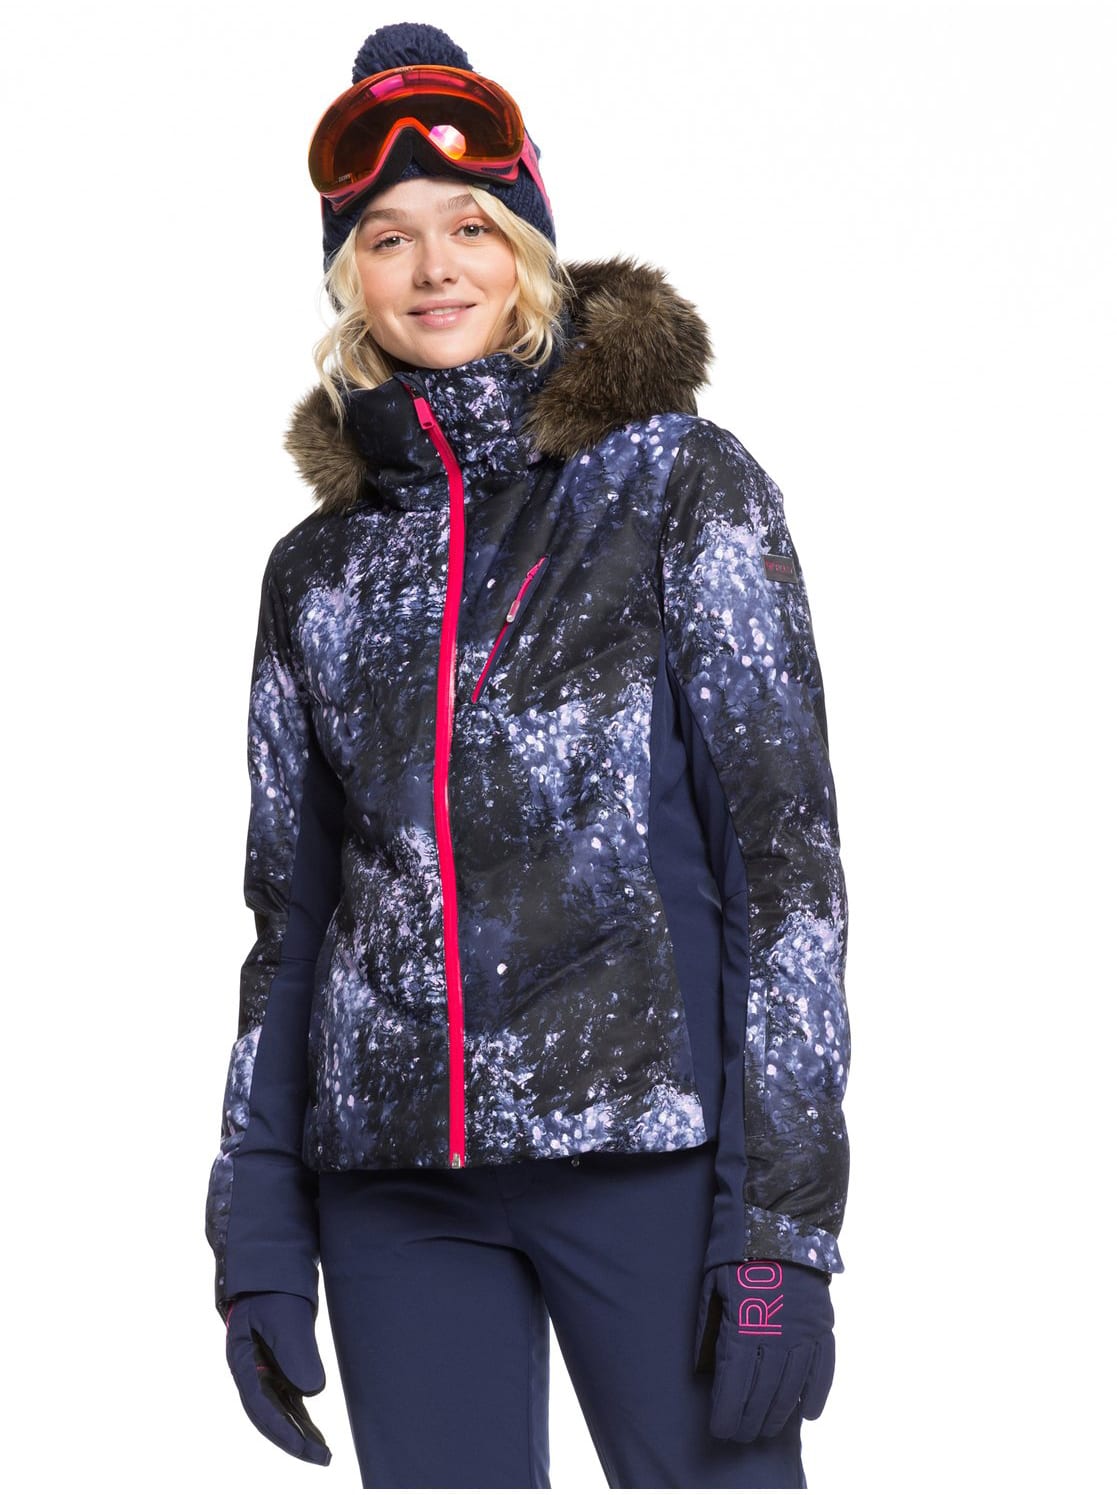 Plus Sale glamor Womens Jacket hot at model sale Hot Snowboard | Roxy Snowstorm